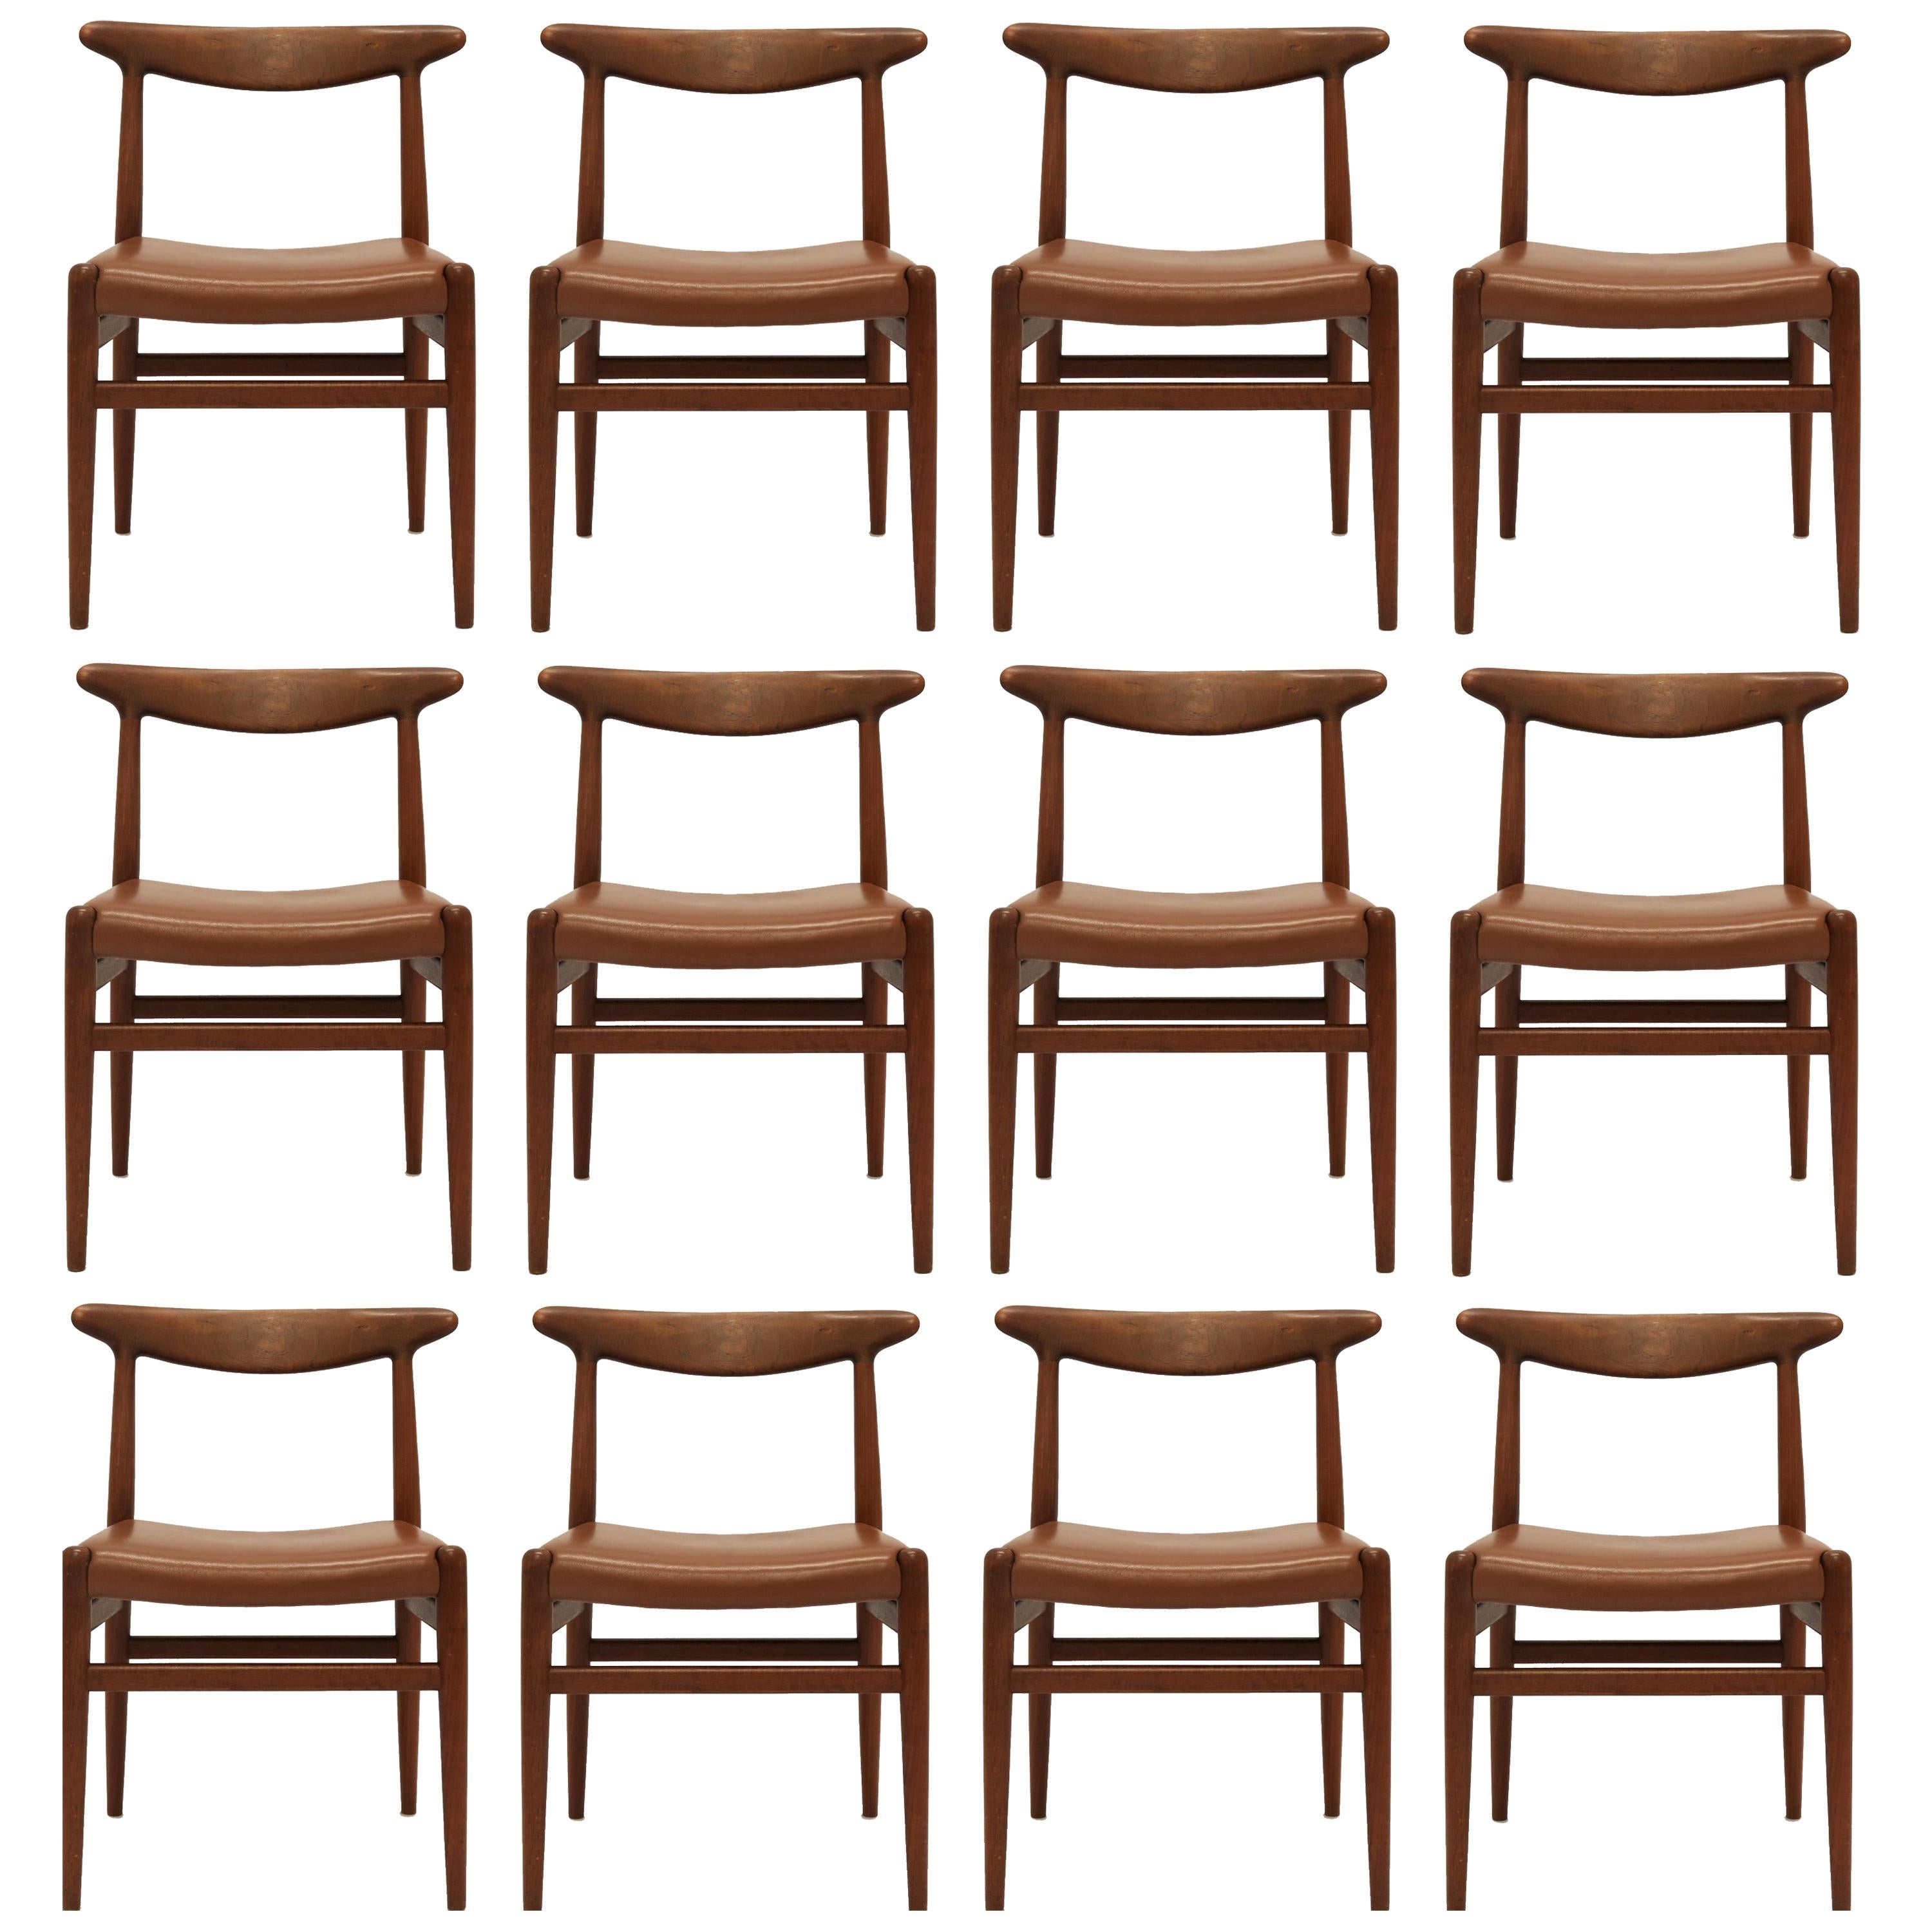 Set of 12 Dining Chairs model W2 by Hans J. Wegner, 1954